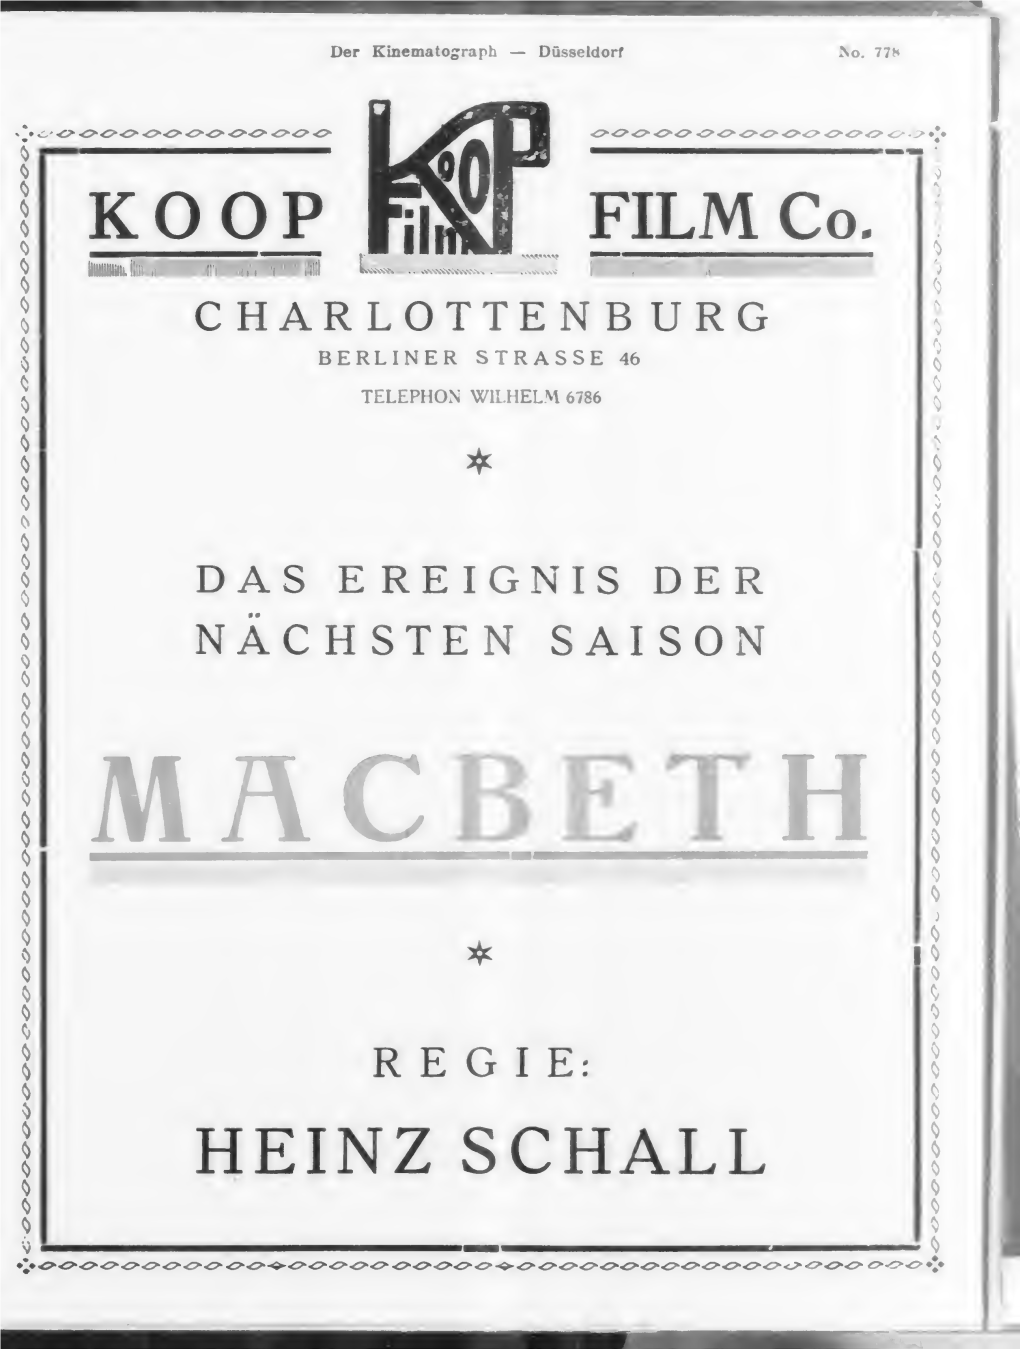 Der Kinematograph (January 1922)